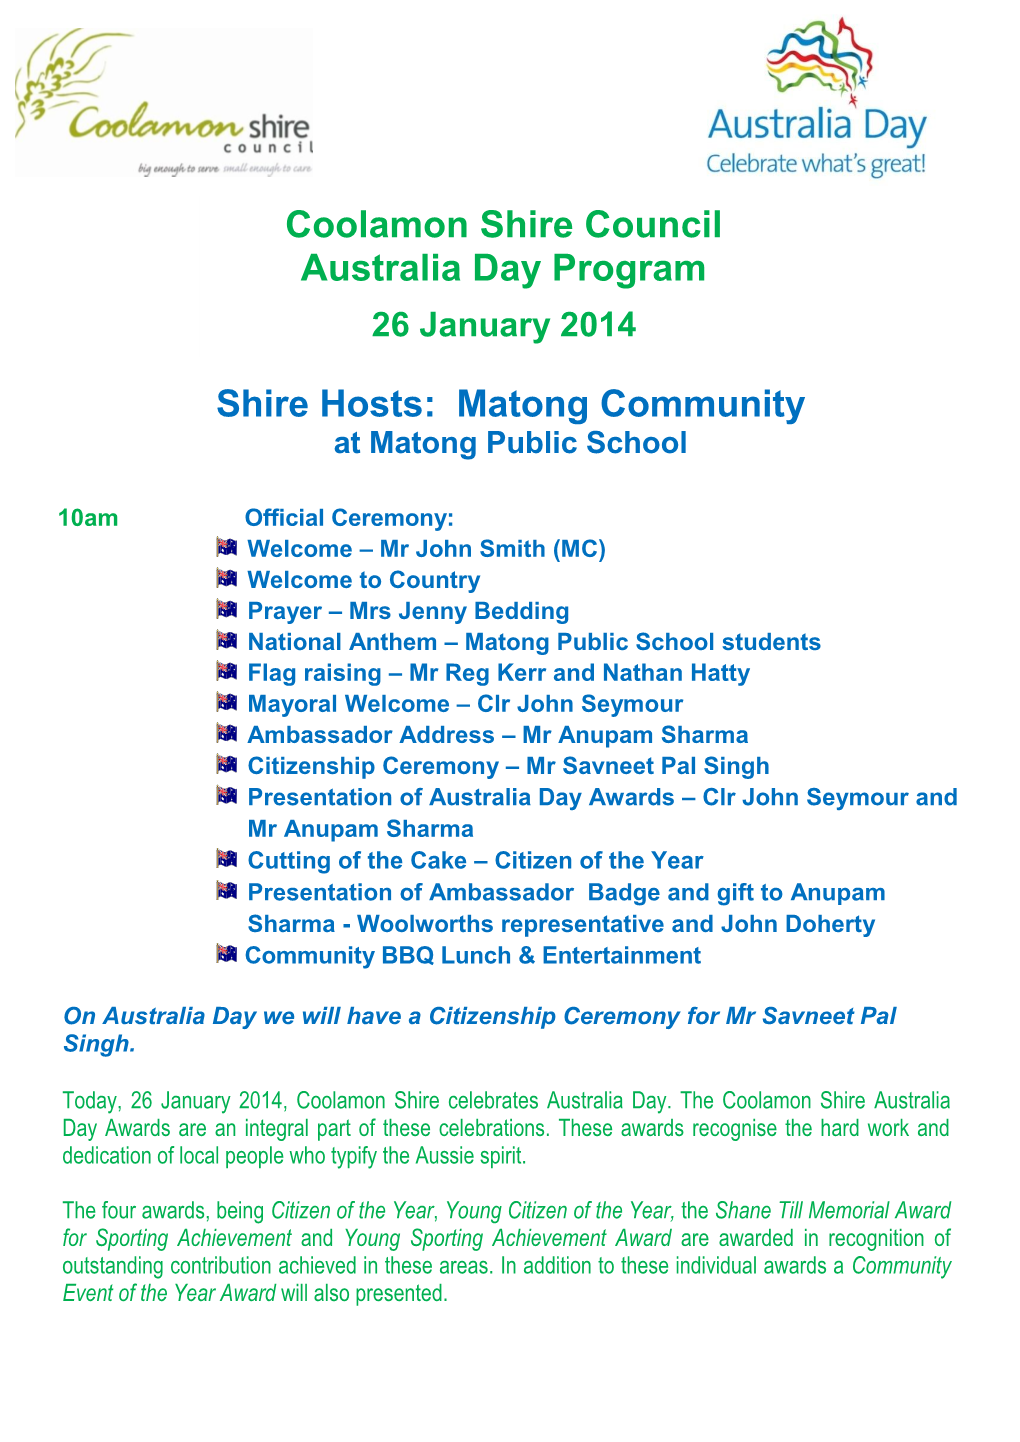 Matong Community Coolamon Shire Council Australia Day Program